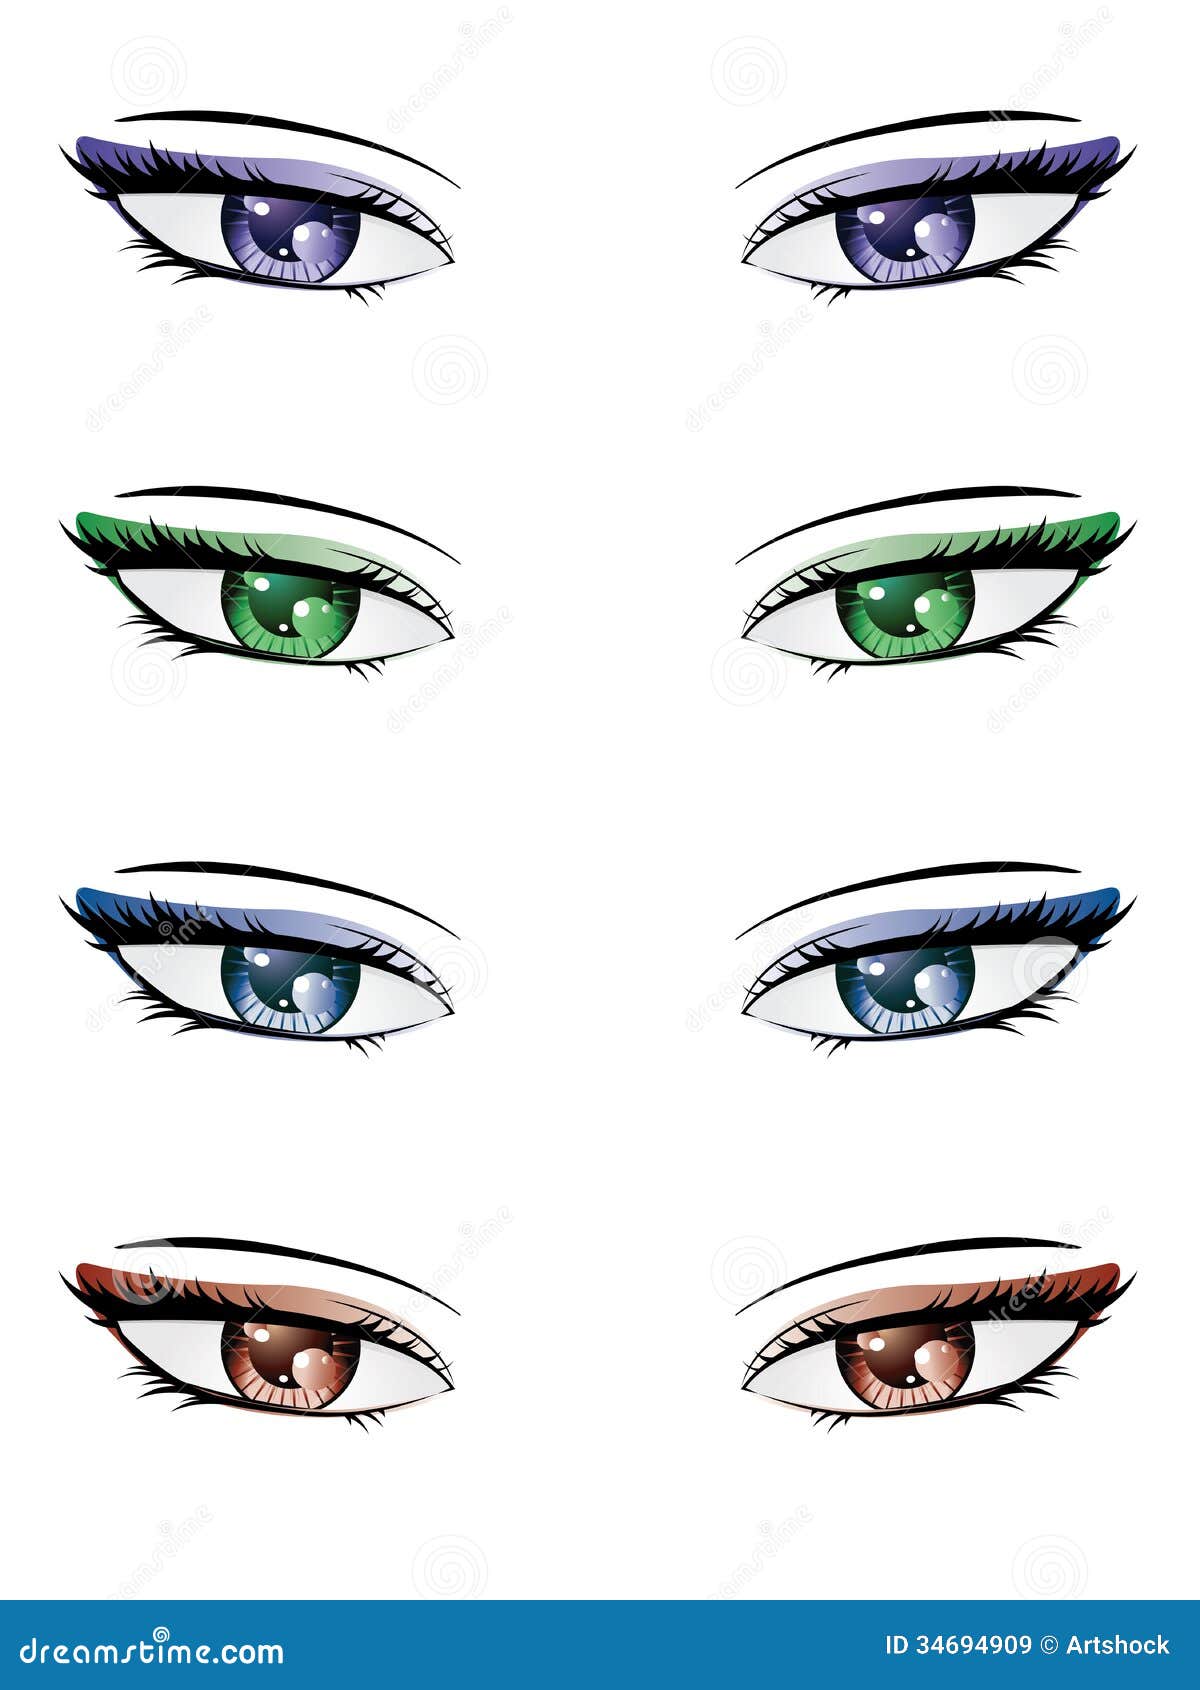 Anime style eyes stock vector. Illustration of beautiful - 34694909